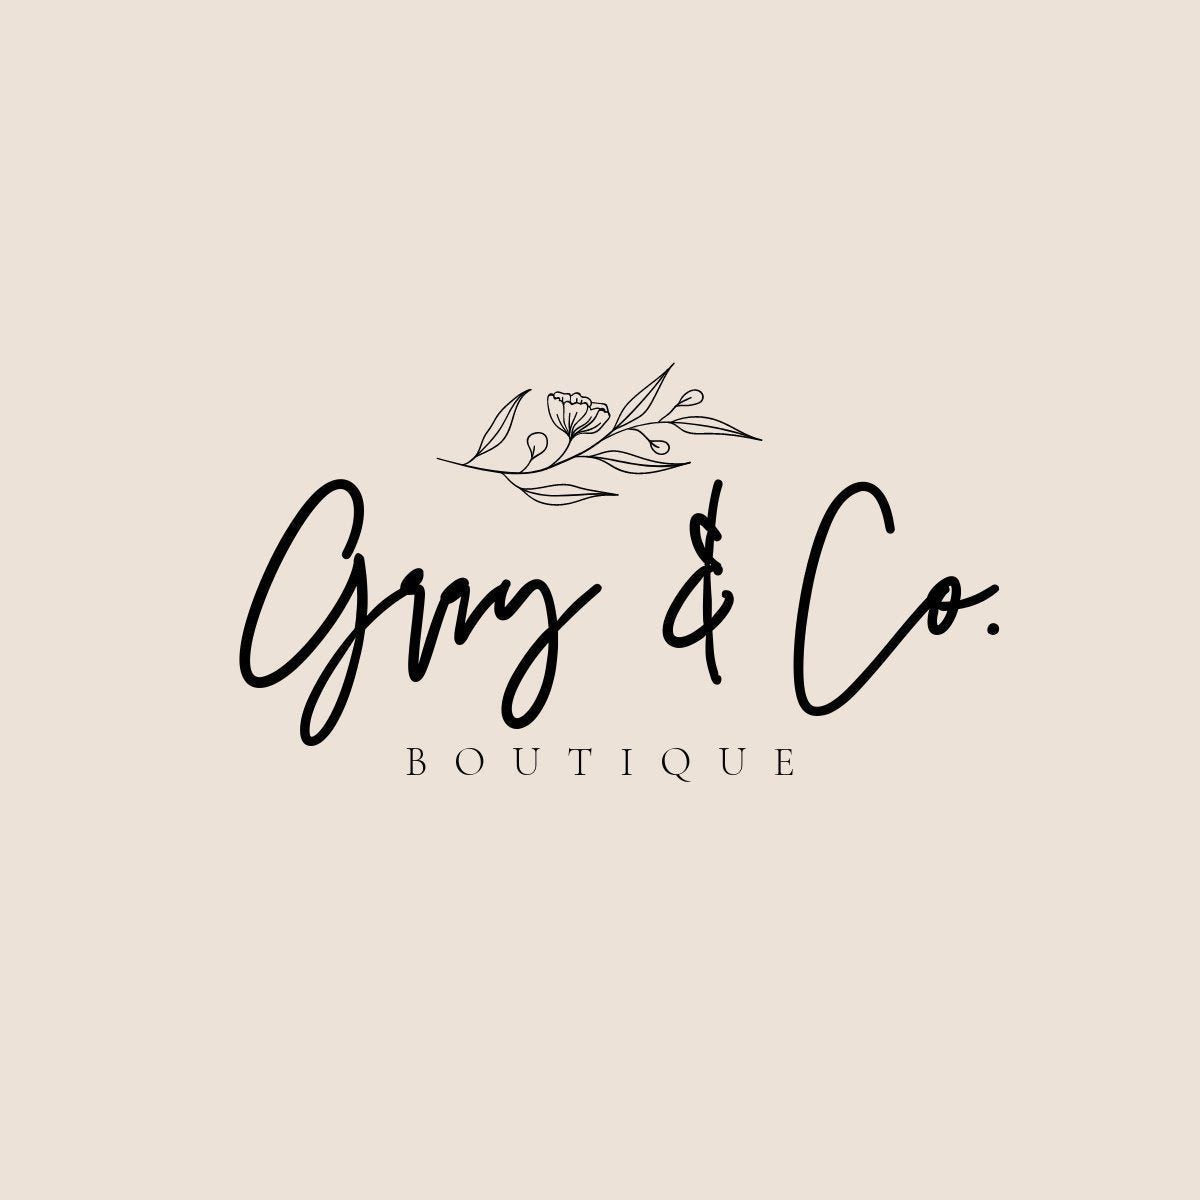 Gray & Co. Boutique